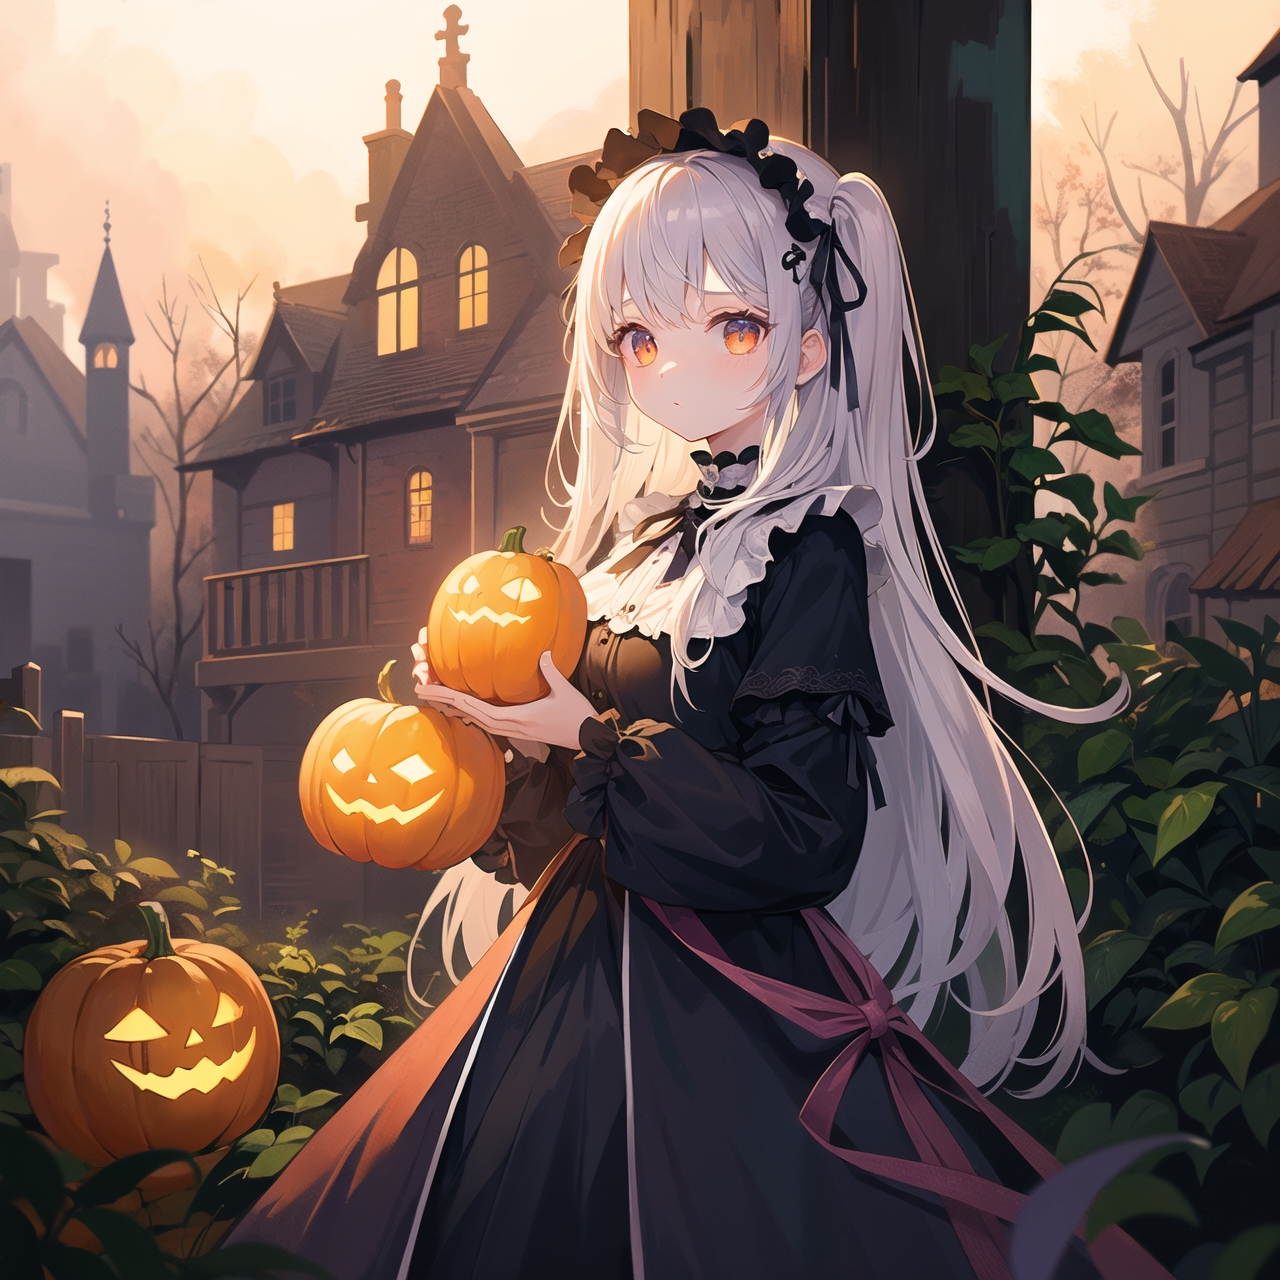 Anime Girl In Halloween Costume Wallpaper by patrika-demhanvico.com.vn